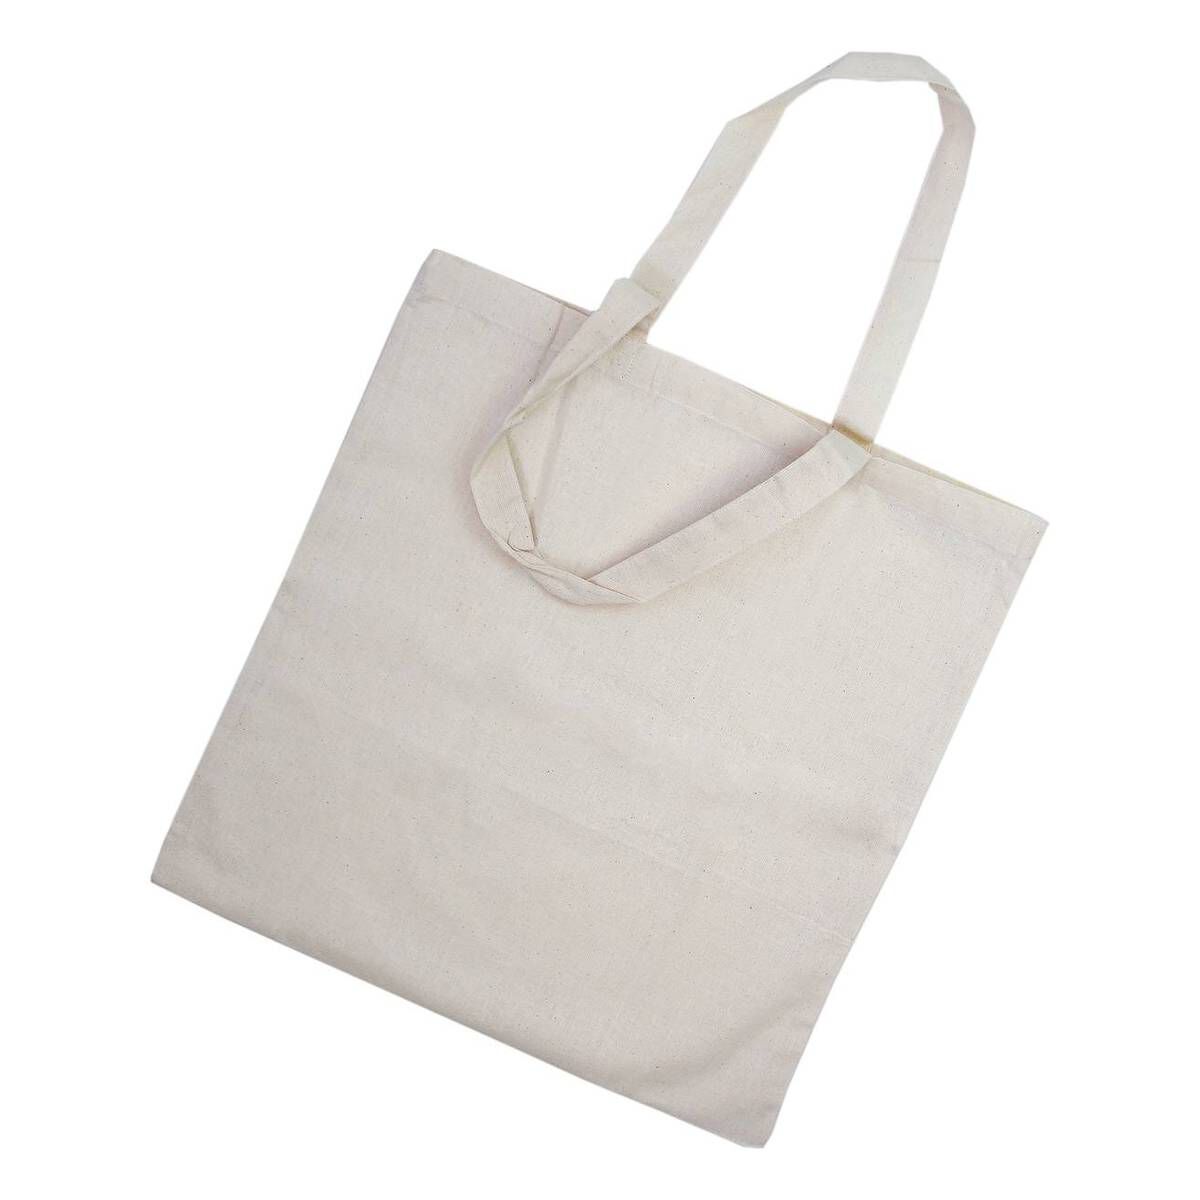 562912 1000 1 natural cotton shopping bag 40cm x 38cm